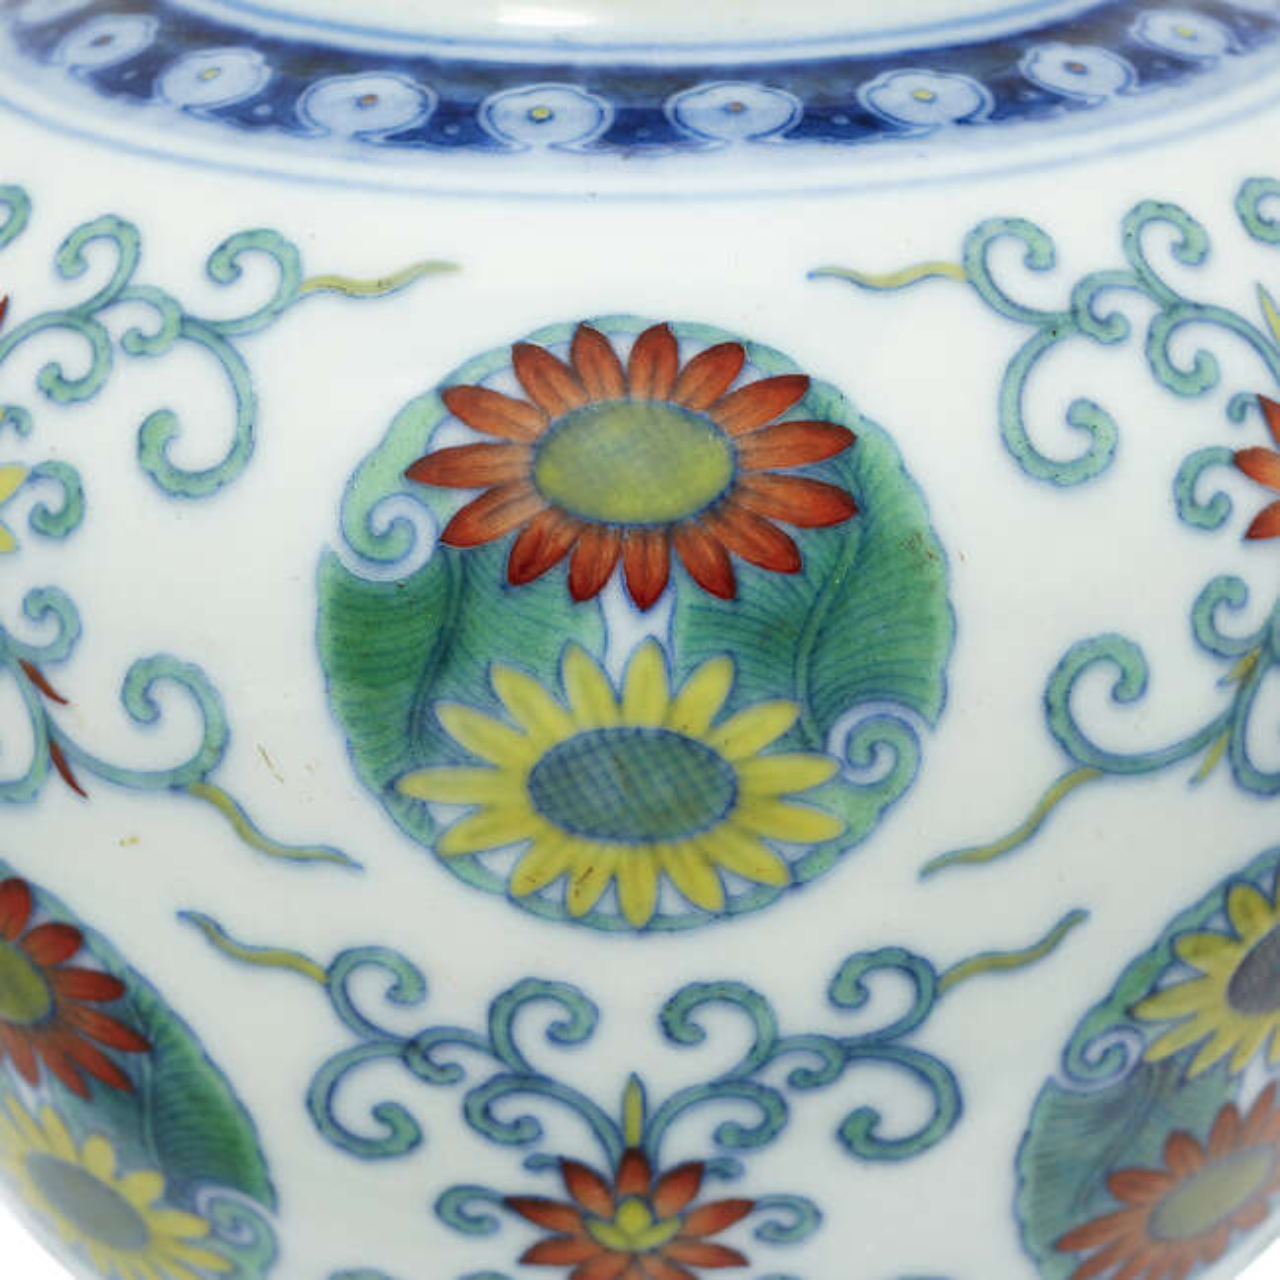 Detalhes da pintura de antigo vaso da dinastia Qing